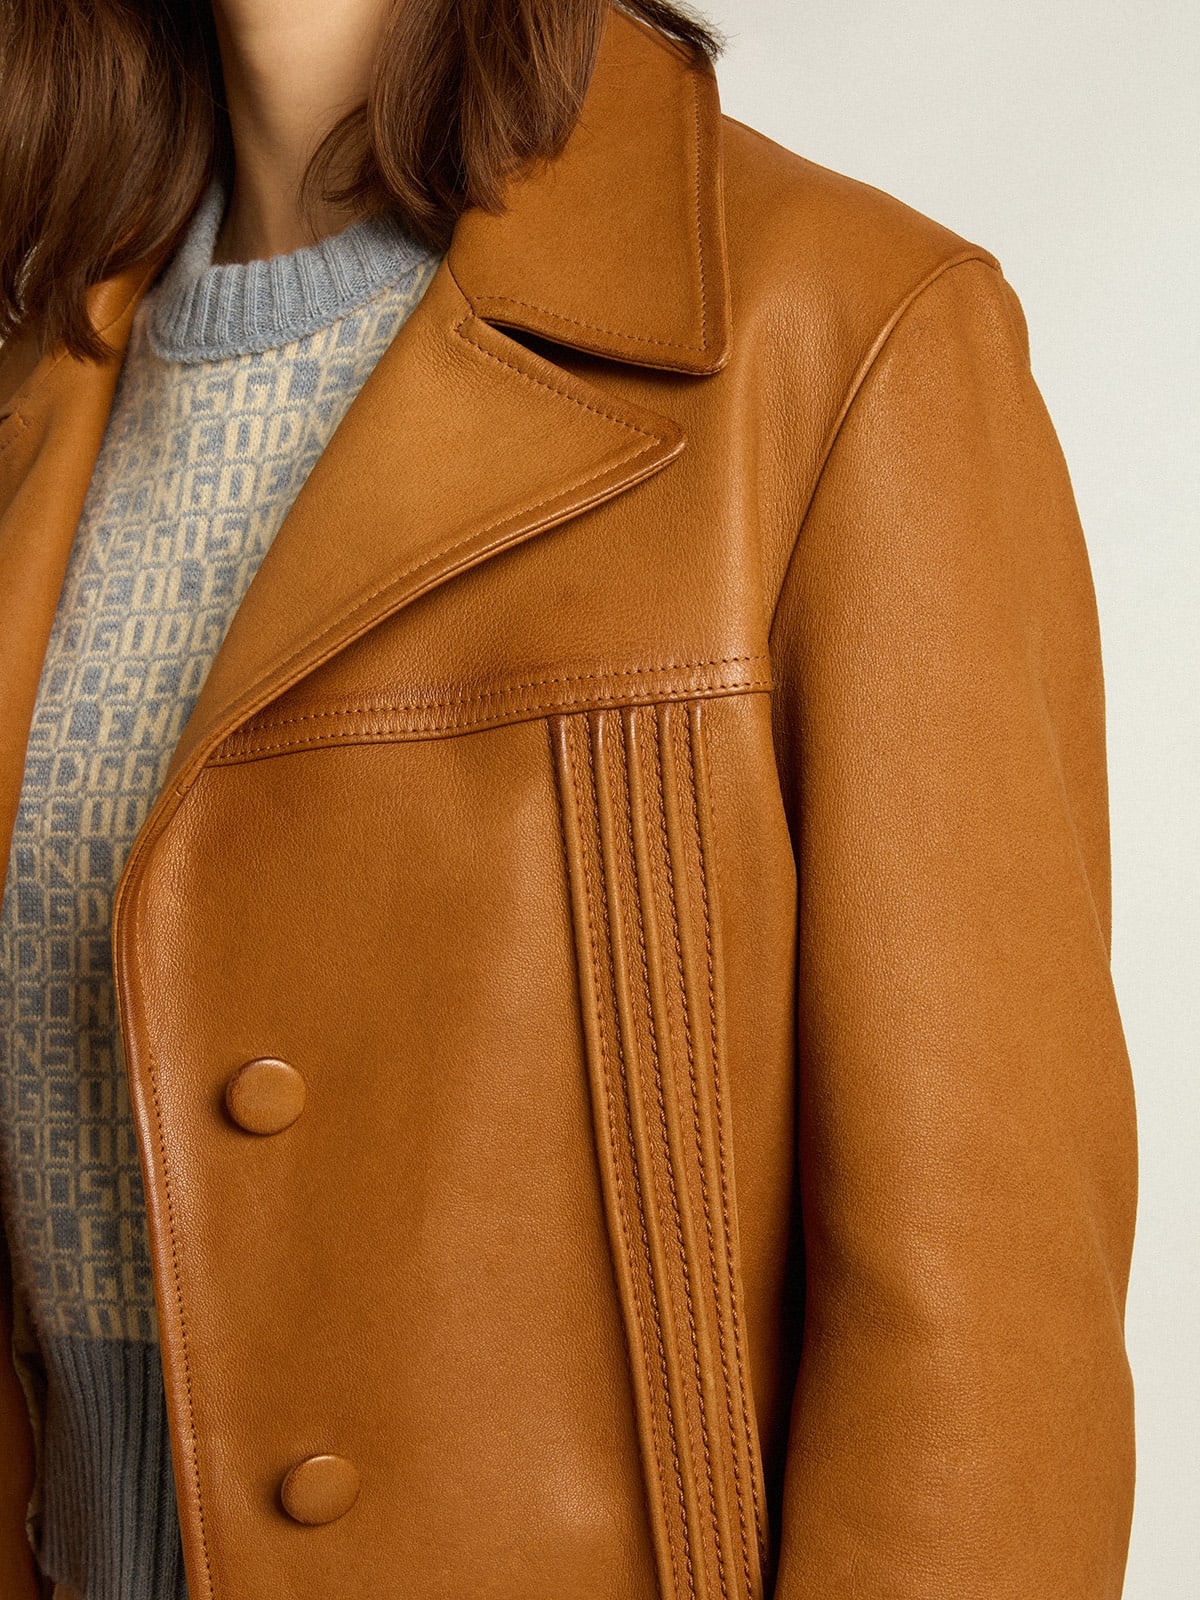 Bronze-brown leather jacket - 5